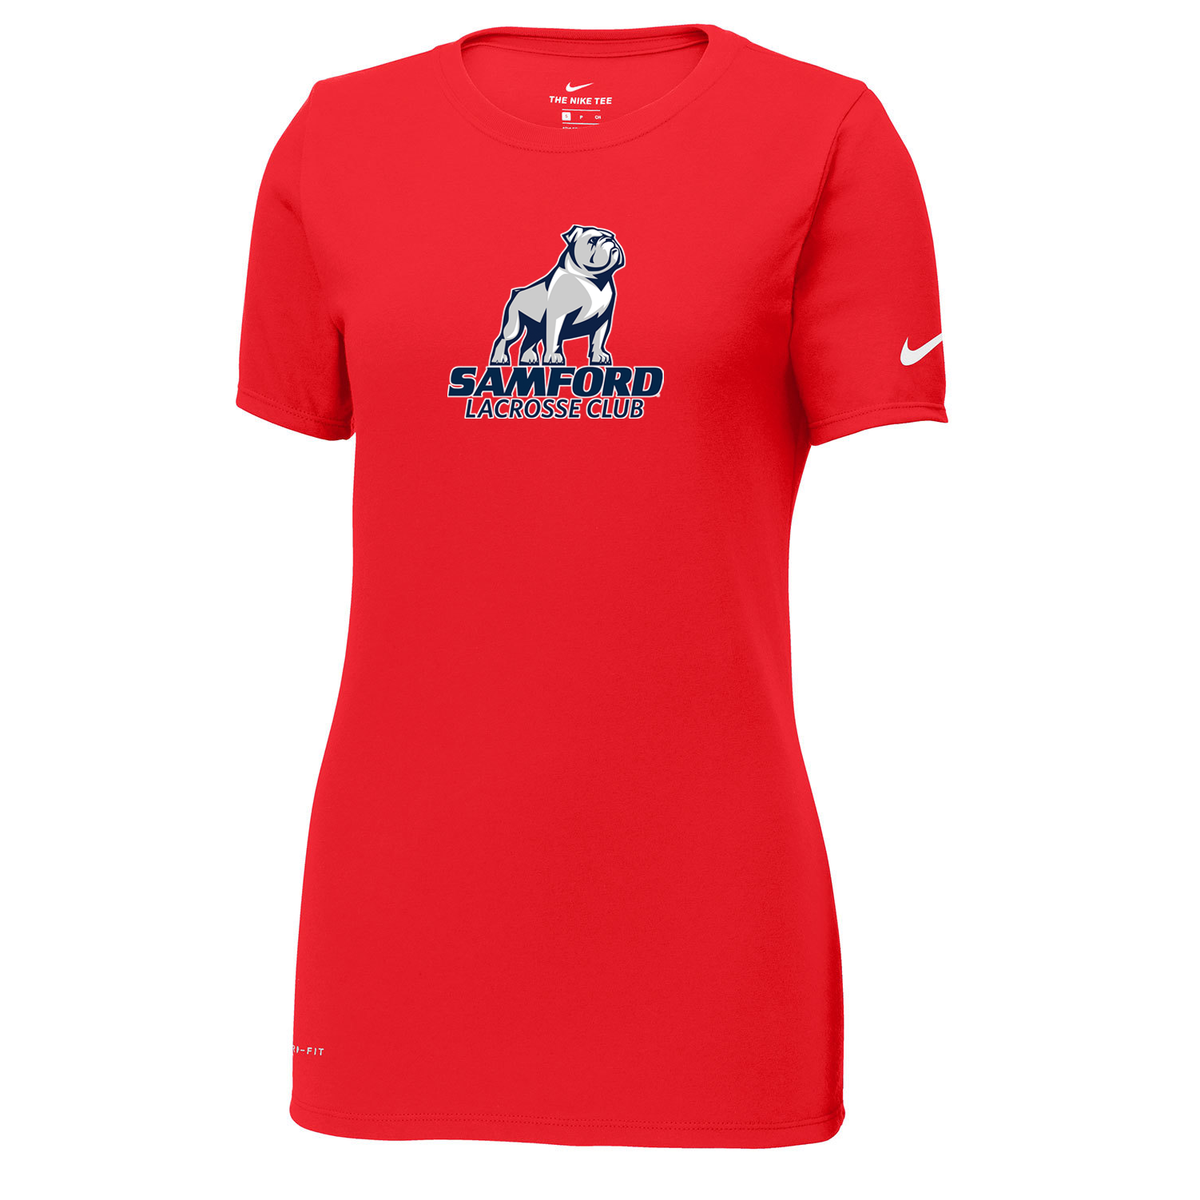 Samford University Lacrosse Club Nike Ladies Dri-FIT Tee